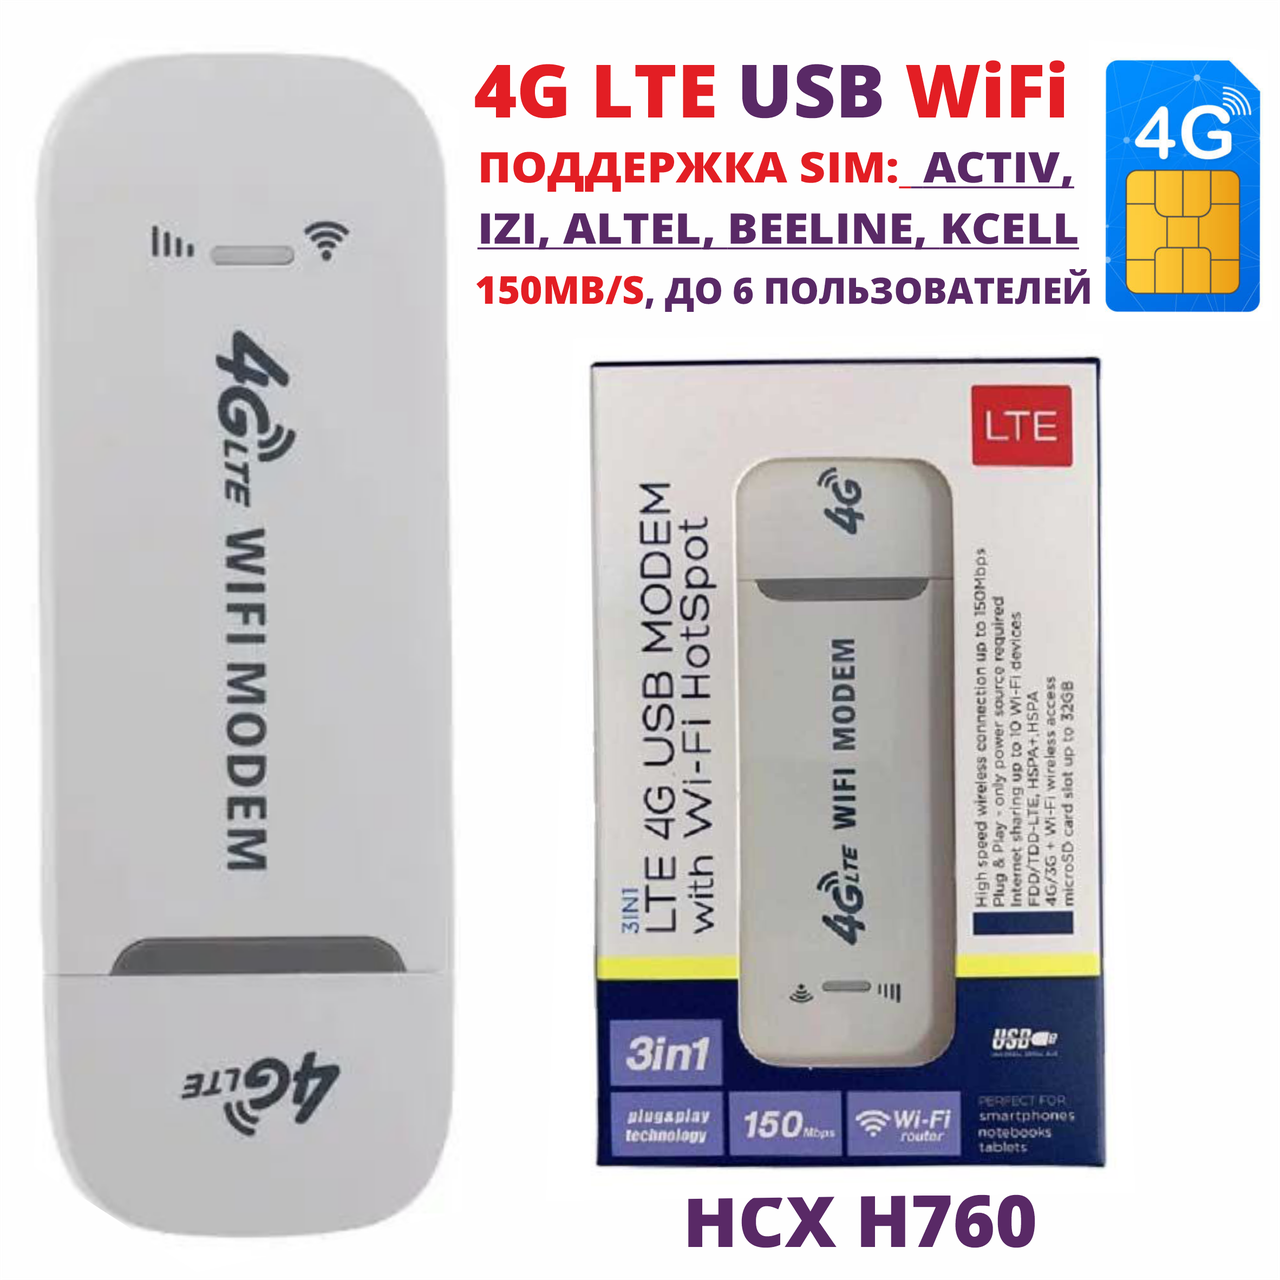 USB WiFi Модем роутер LTE 4G 3G беспроводной 150 мб/с SIM карты СИМ Tele2 Билайн Актив Kcell Altel IZI